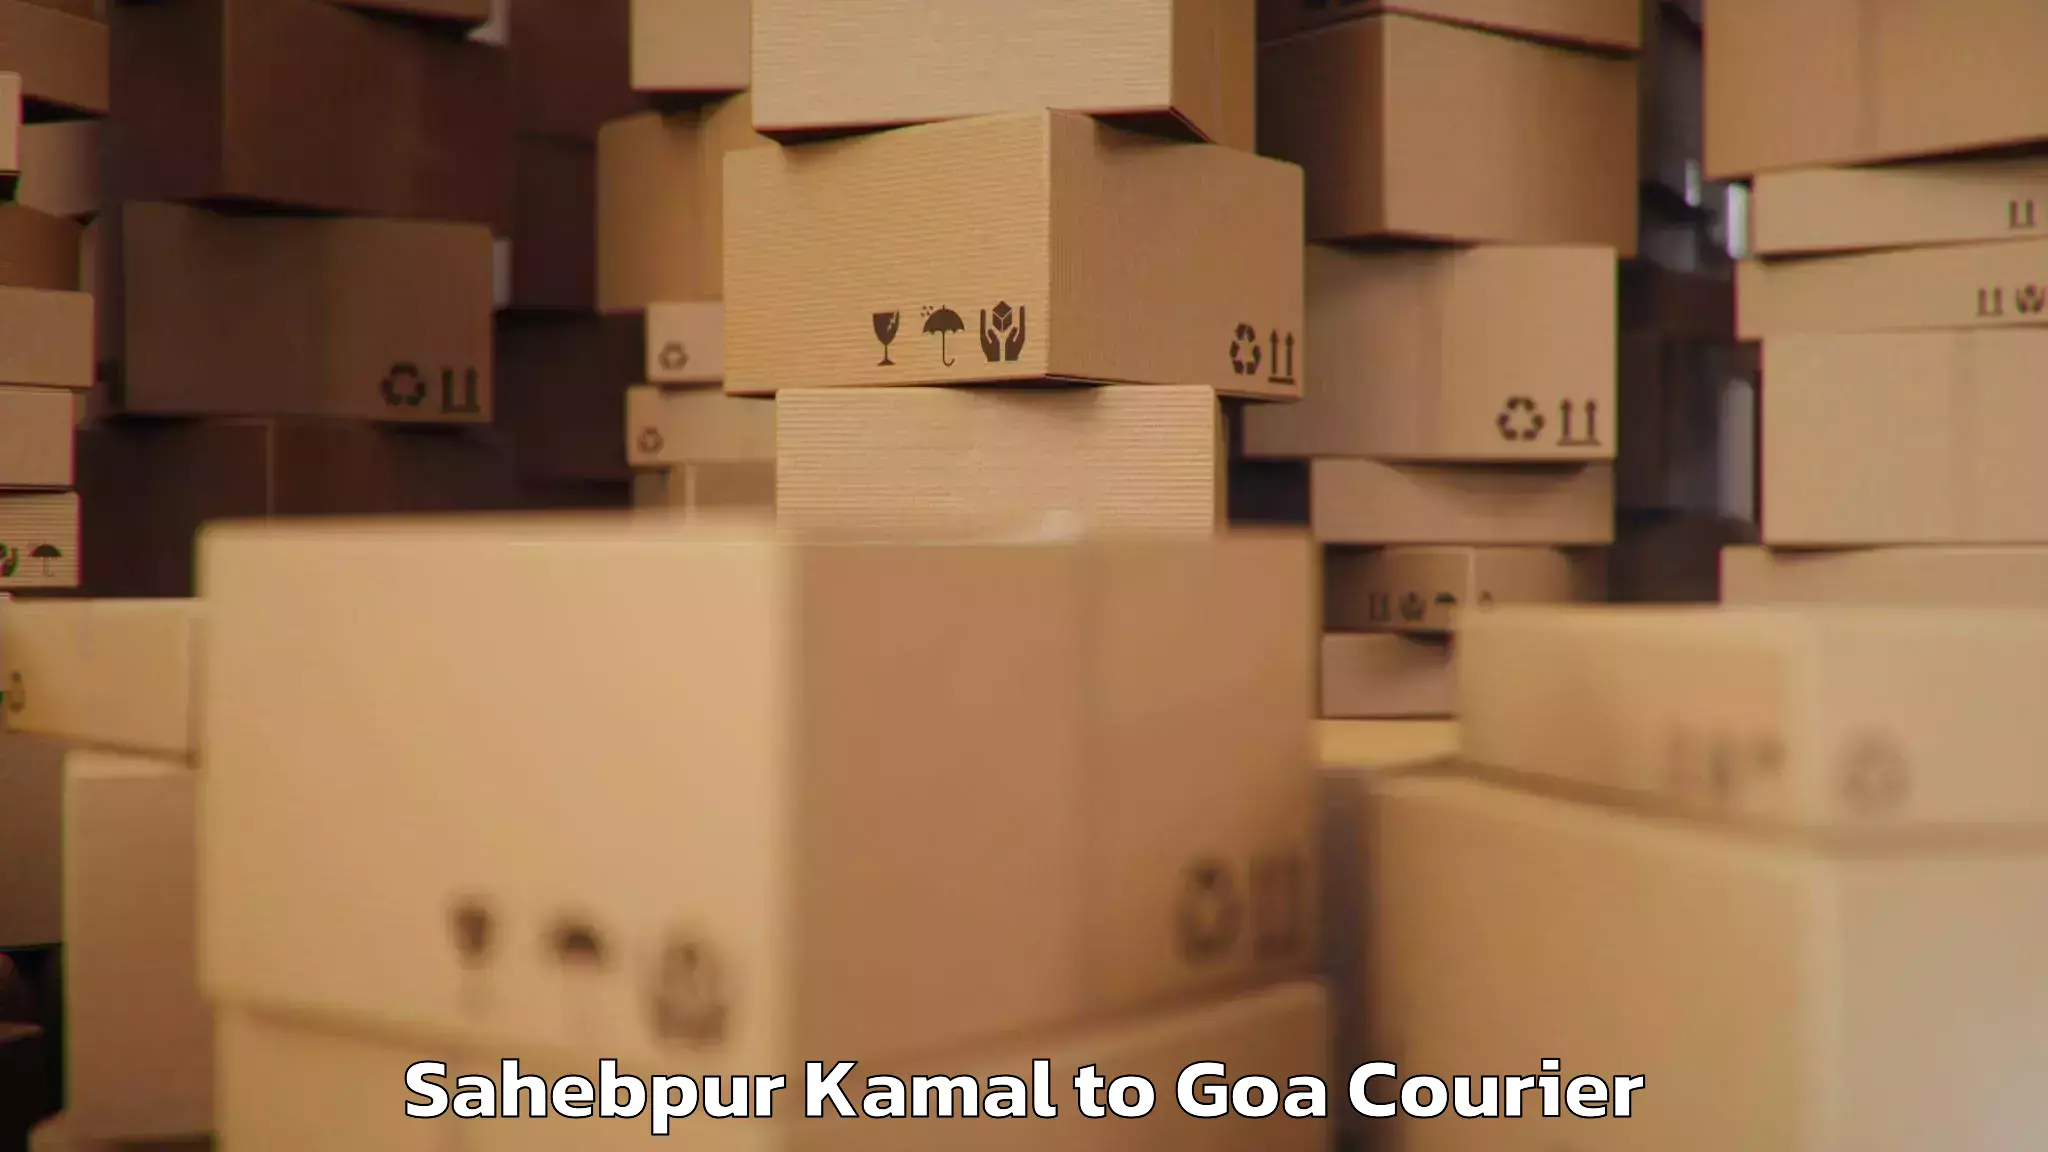 Baggage relocation service Sahebpur Kamal to Goa